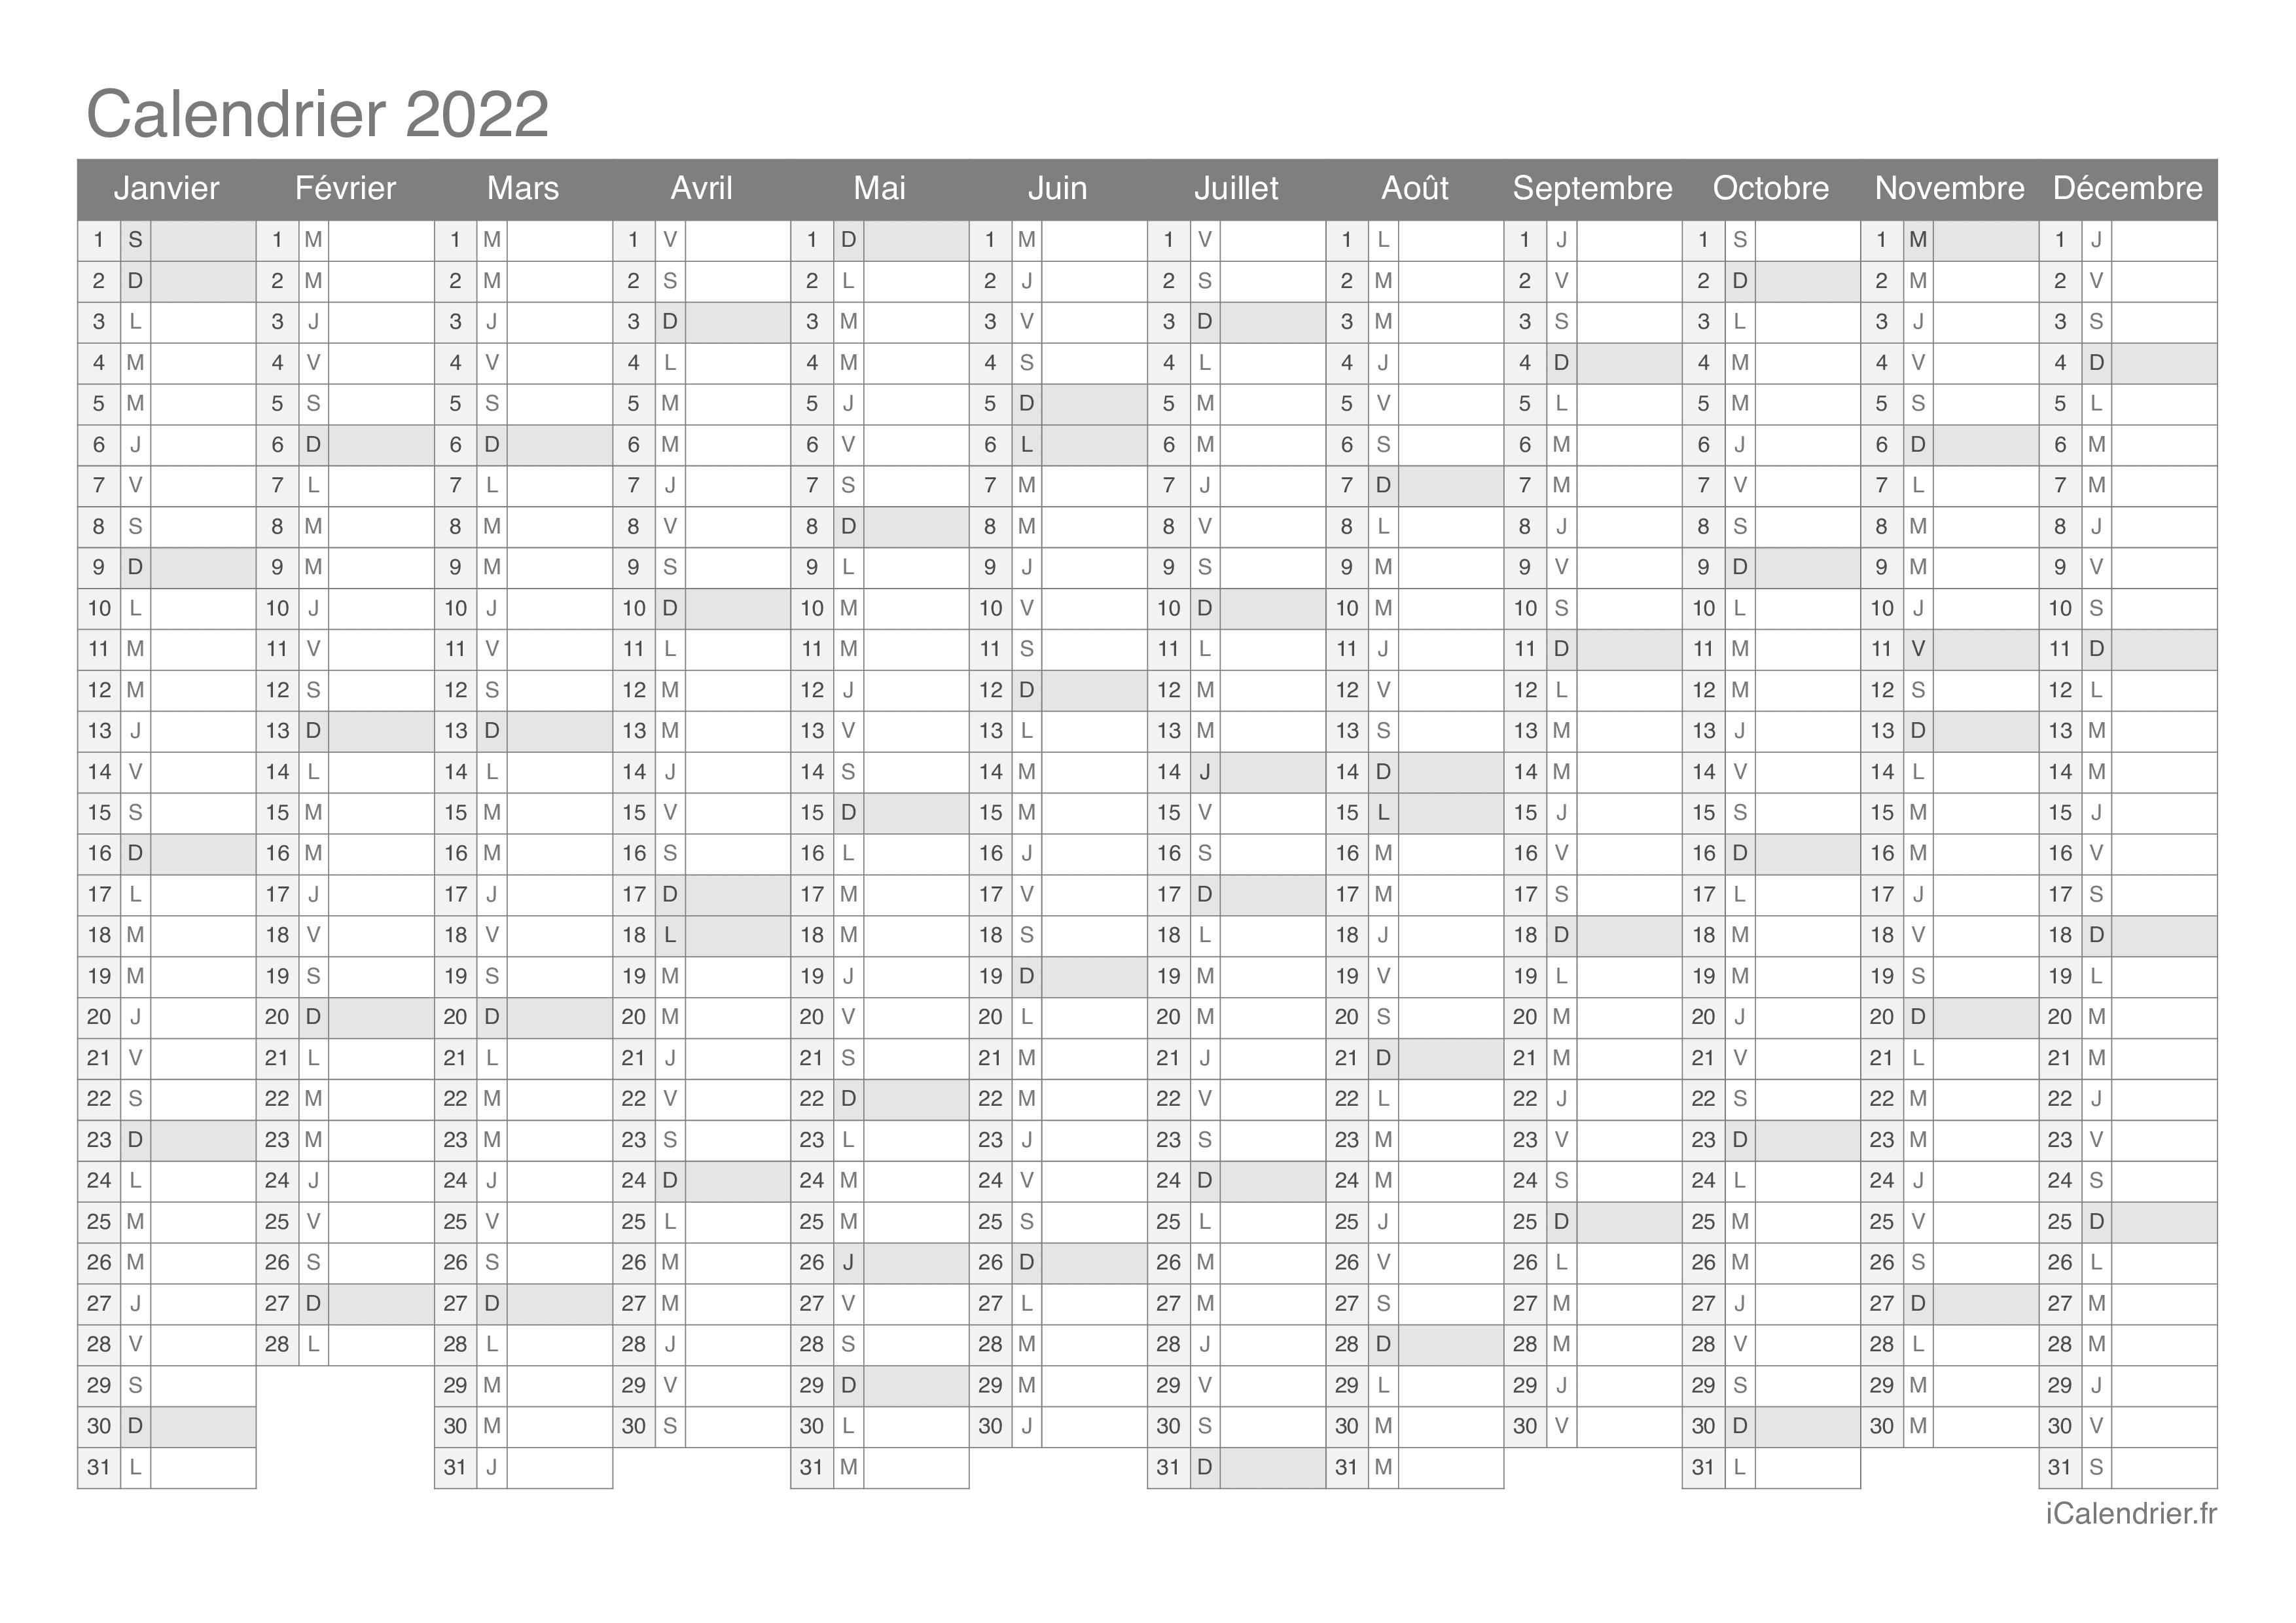 Calendrier 2022 Vide Calendrier 2022 à imprimer PDF et Excel   iCalendrier